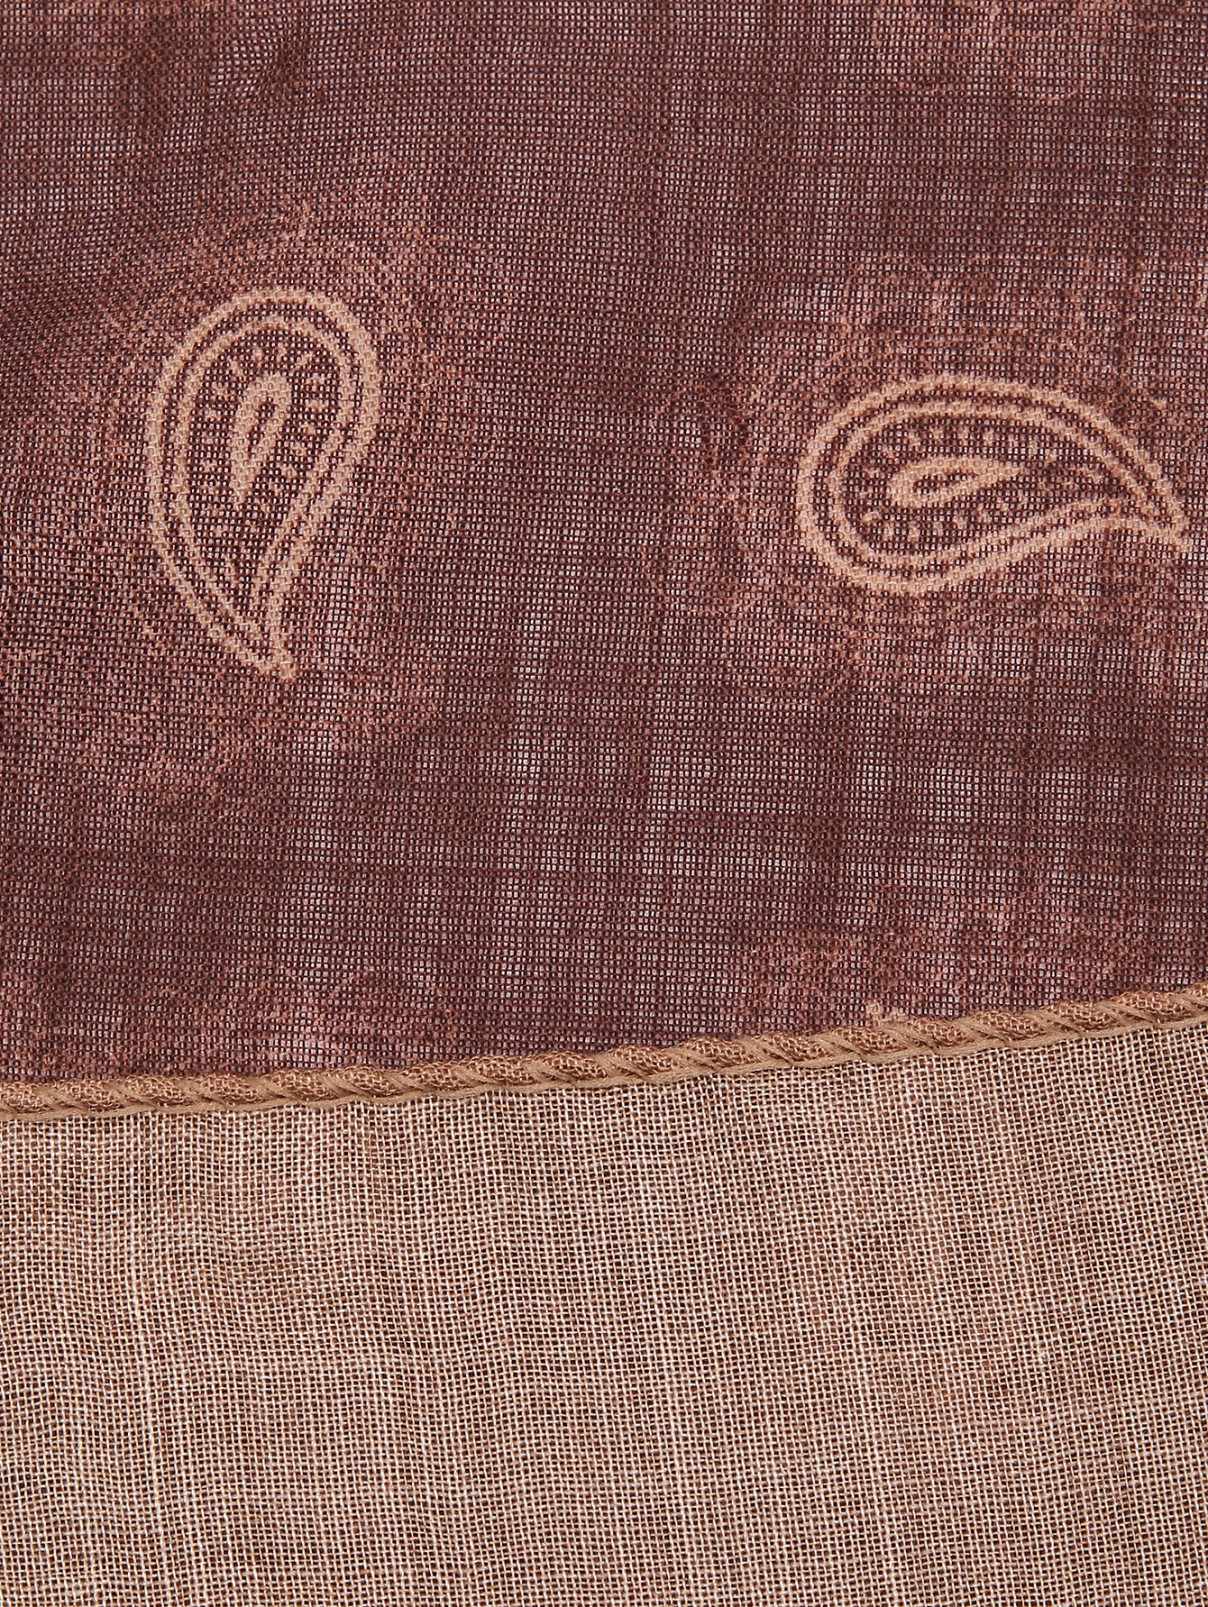 Платок из шерсти и шелка с узором LARDINI  –  Деталь  – Цвет:  Бежевый